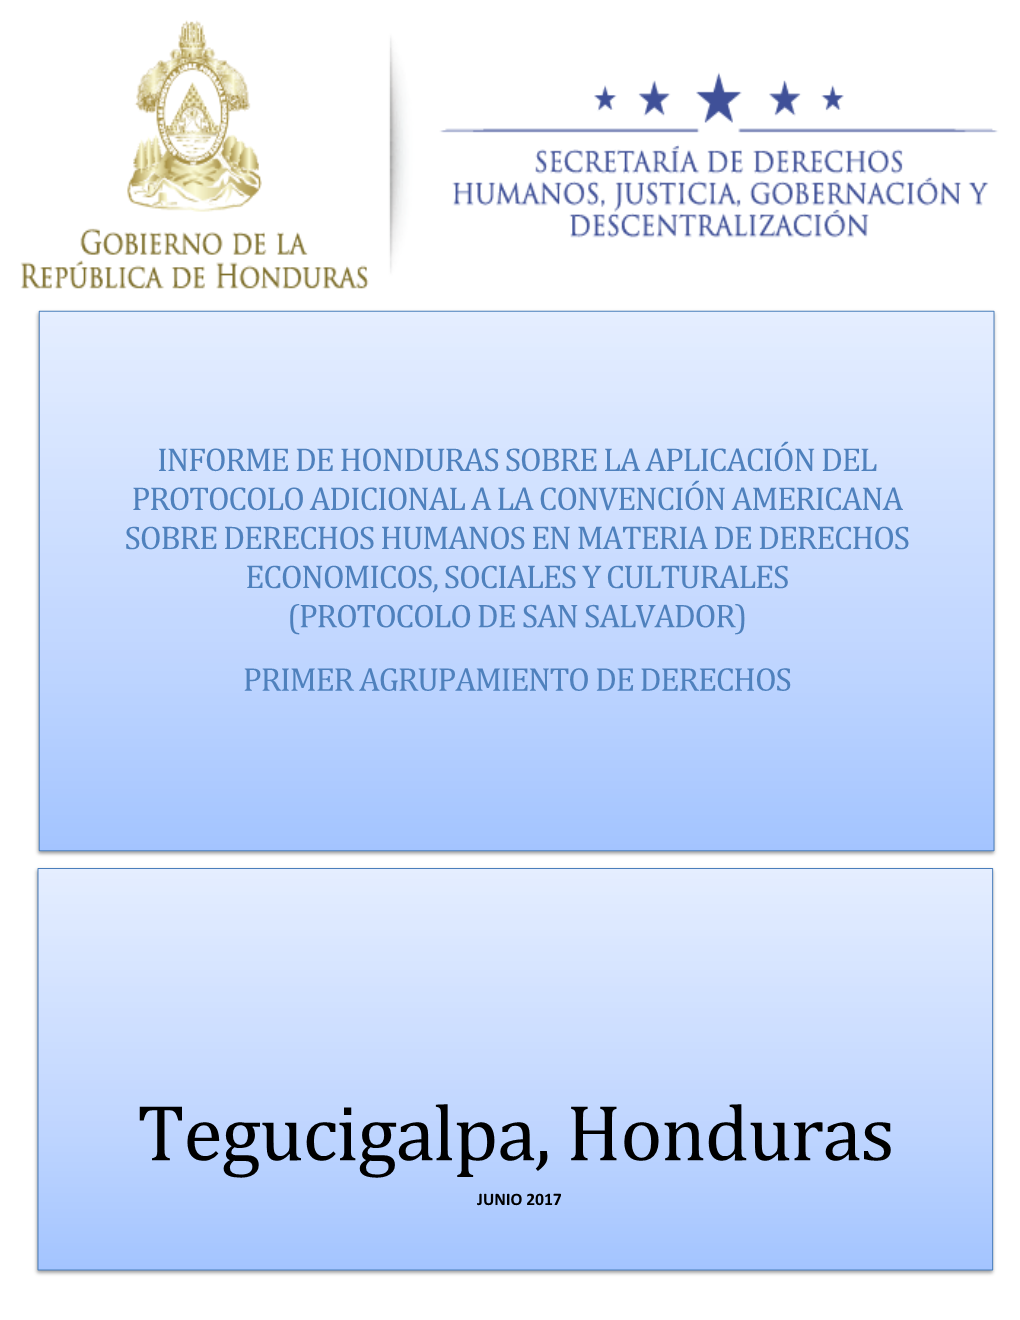 Tegucigalpa, Honduras JUNIO 2017 1